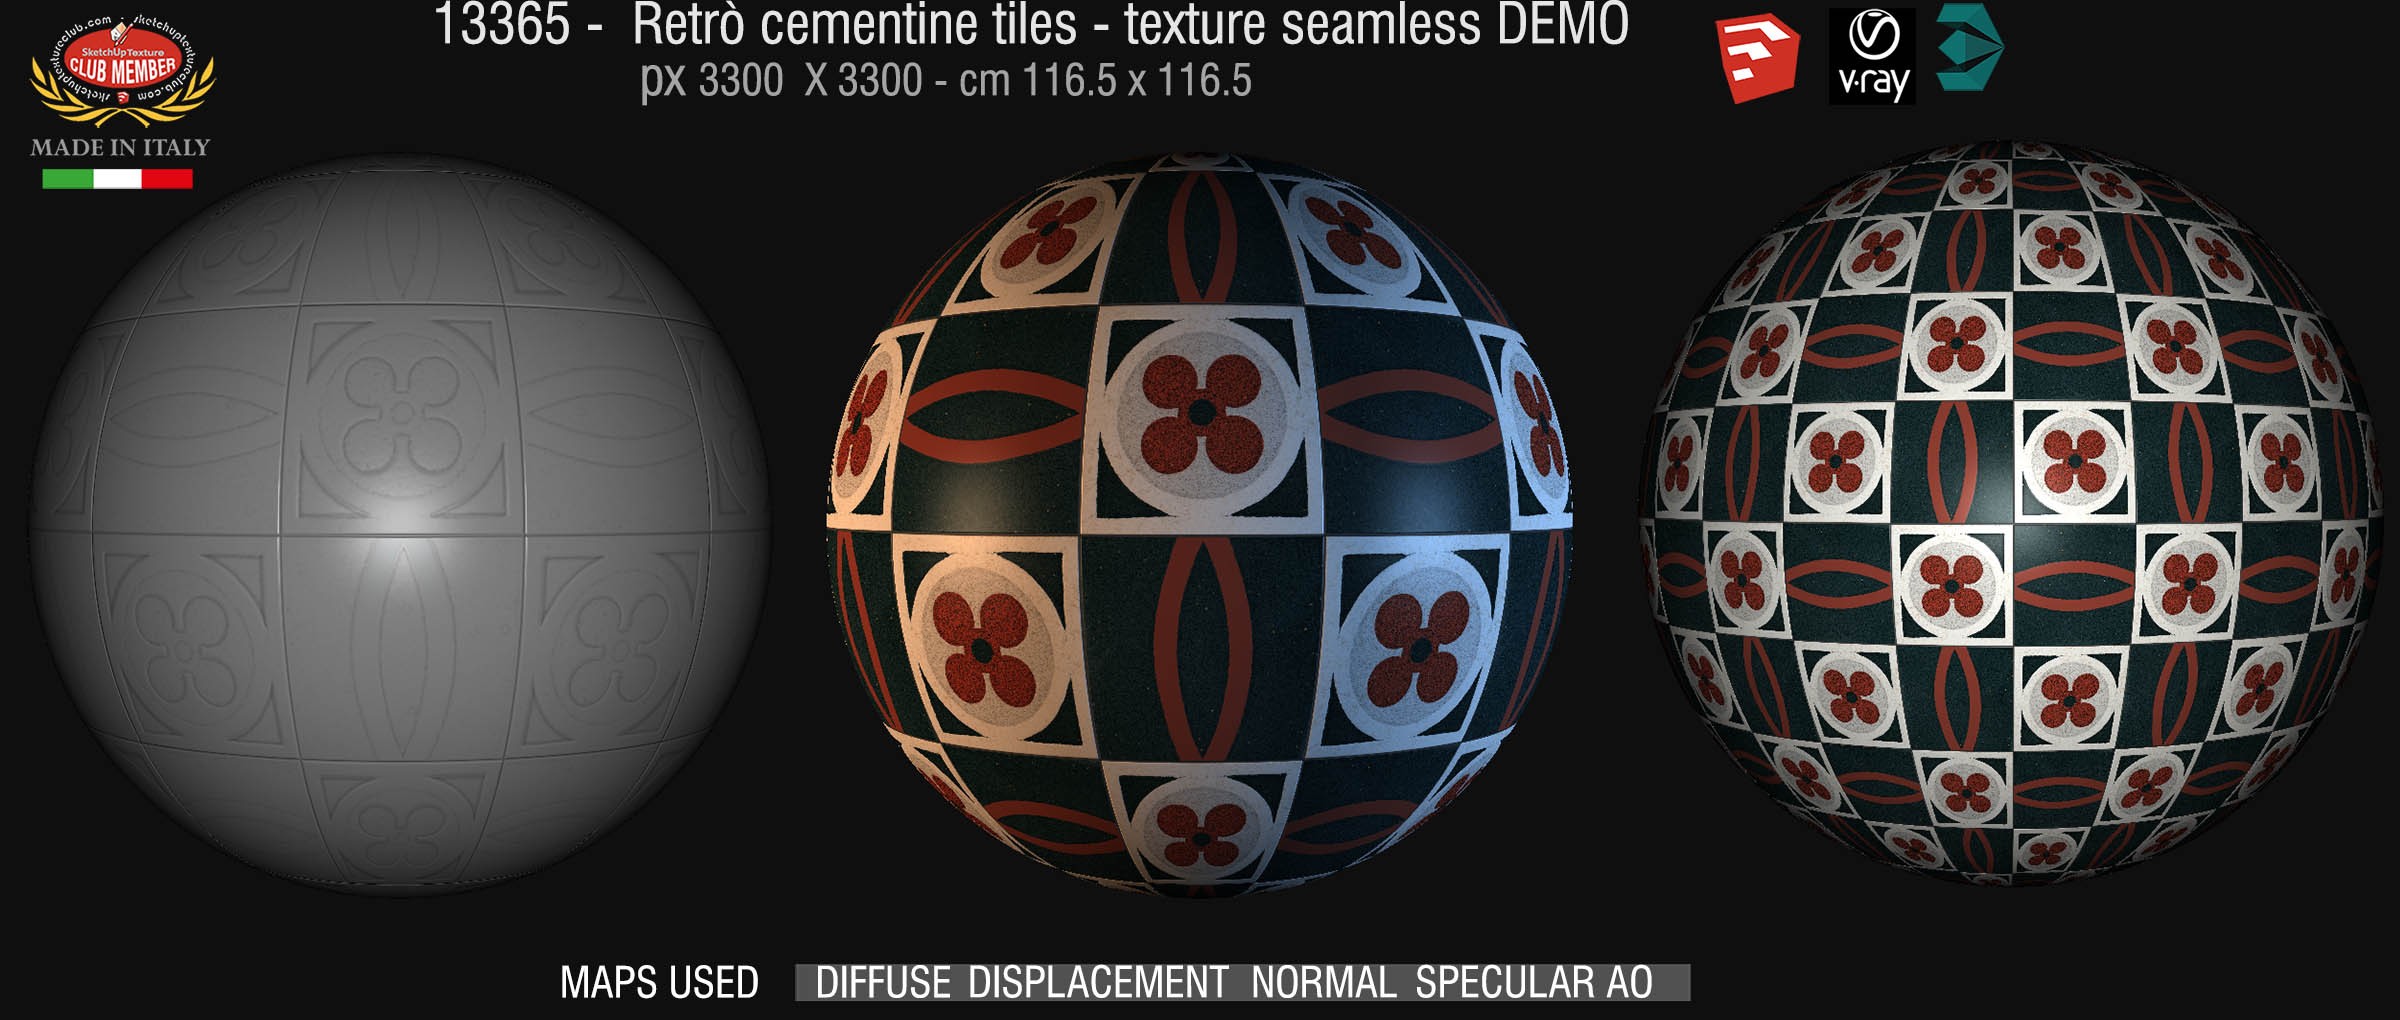 13365 retrò cementine tiles - texture seamless + maps DEMO